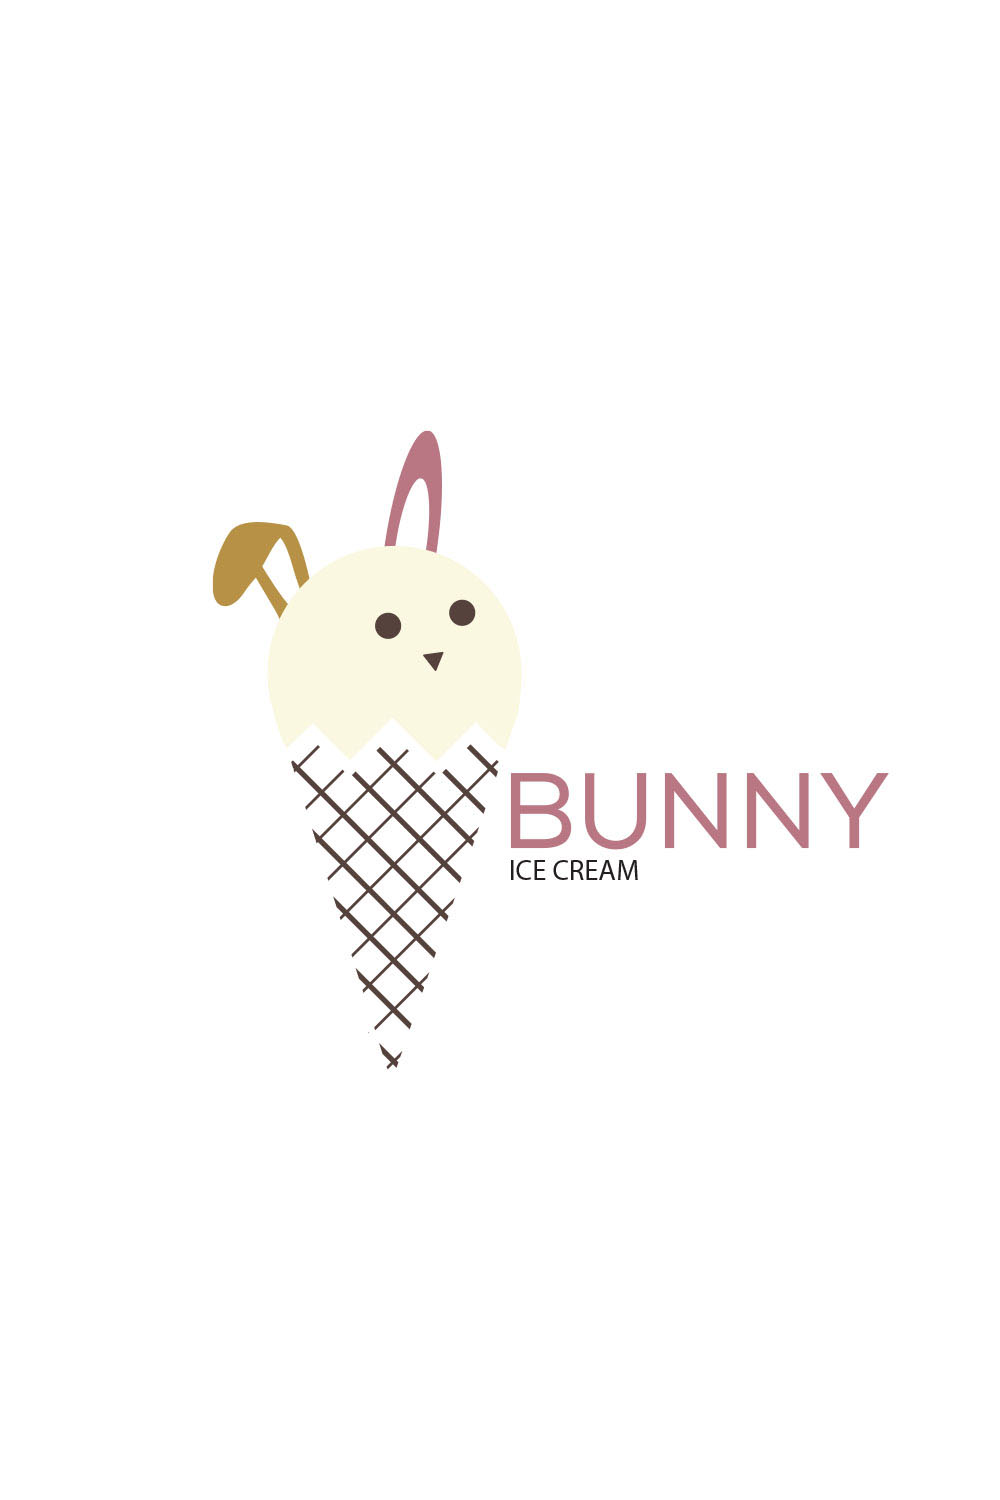 Creative Bunny Ice Cream Logo Pinterest image.